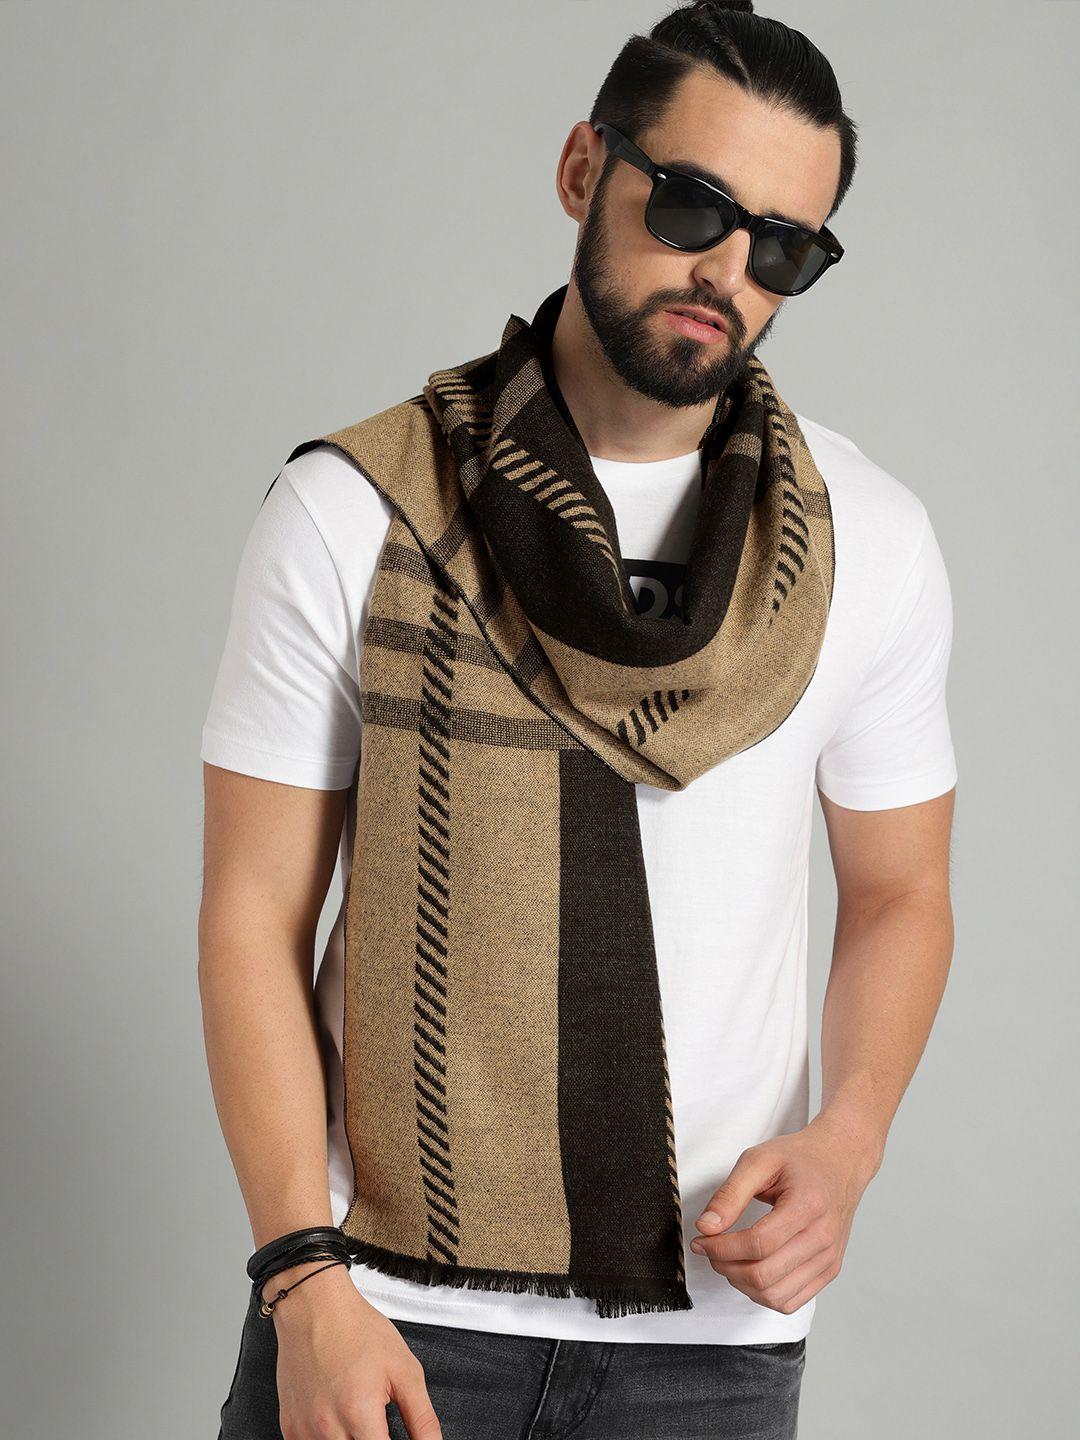 the roadster lifestyle co unisex khaki & black striped scarf